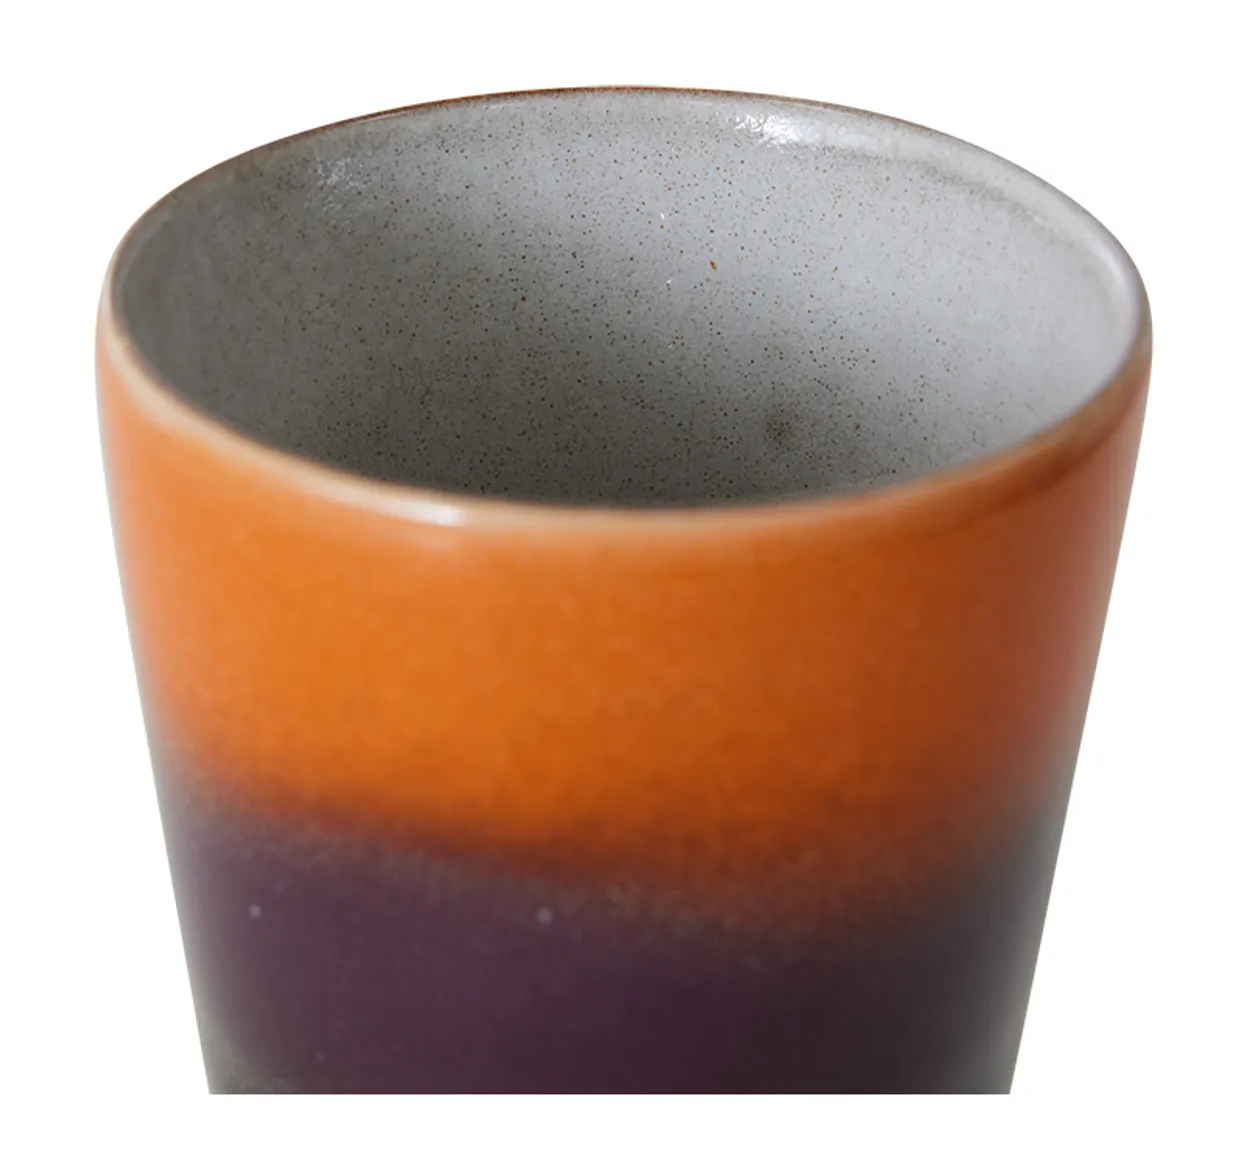 70s ceramics: tea mug, rise